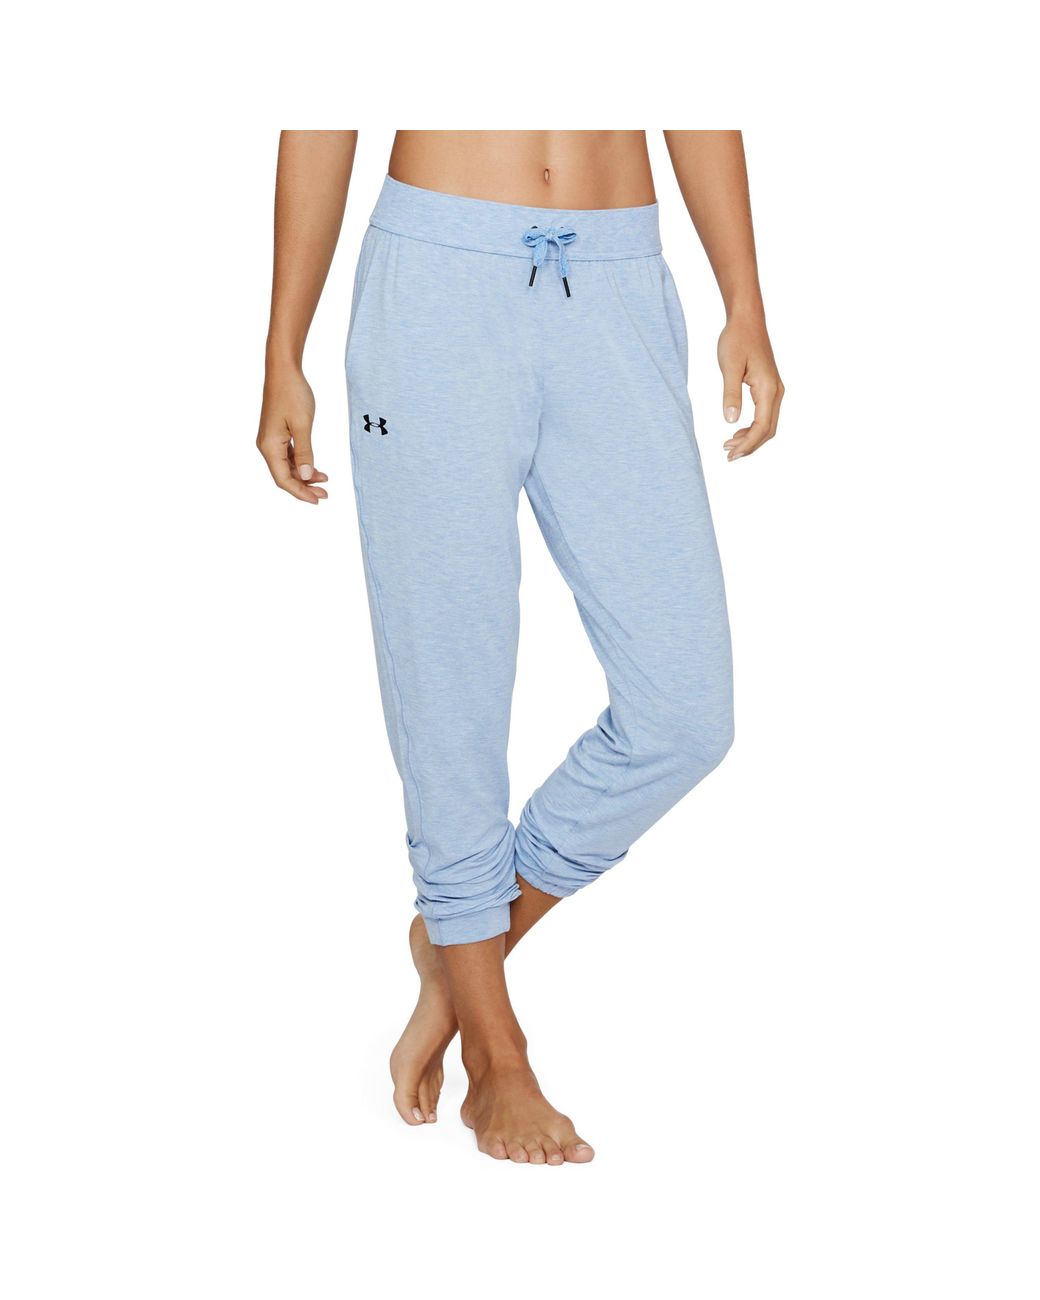 Under Armour Women's Athlete Recovery Sleepwear Pants in Blue